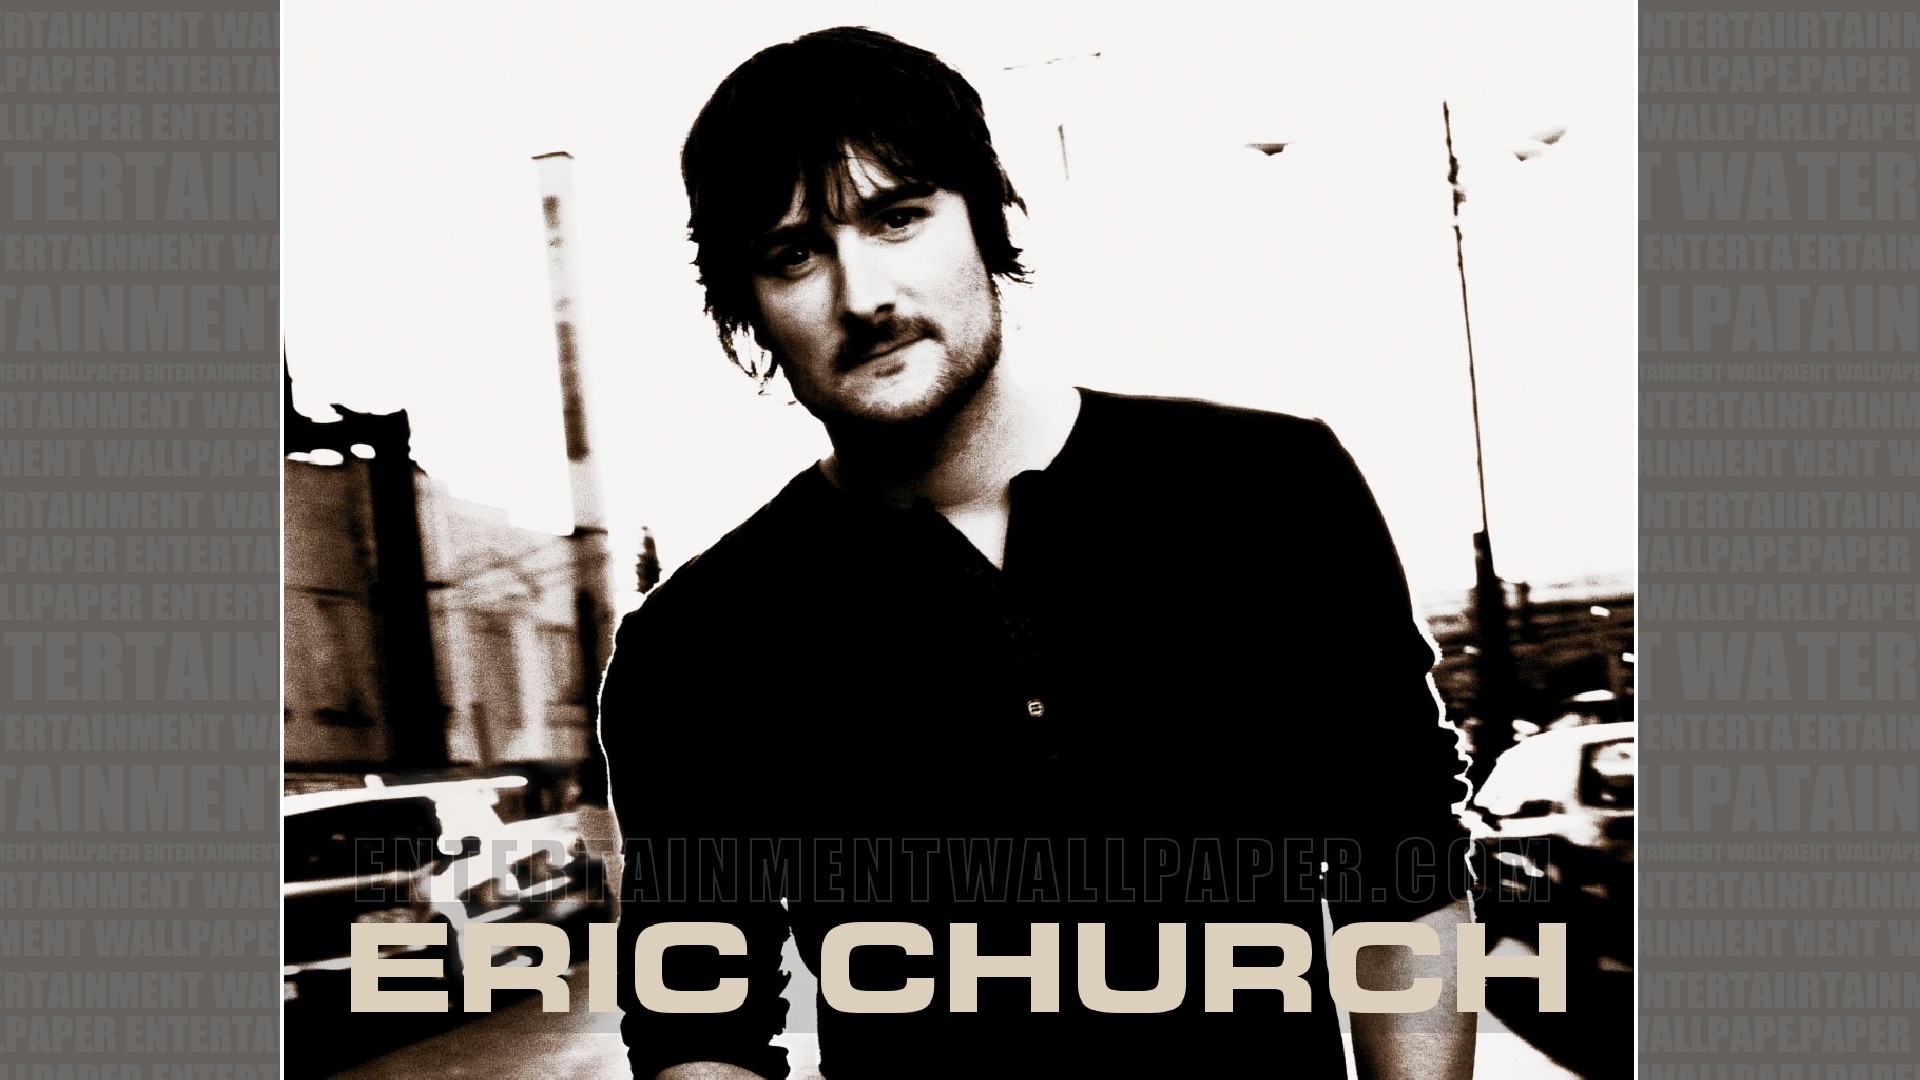 1920x1080 Eric Church Wallpaper - Original size, download now.